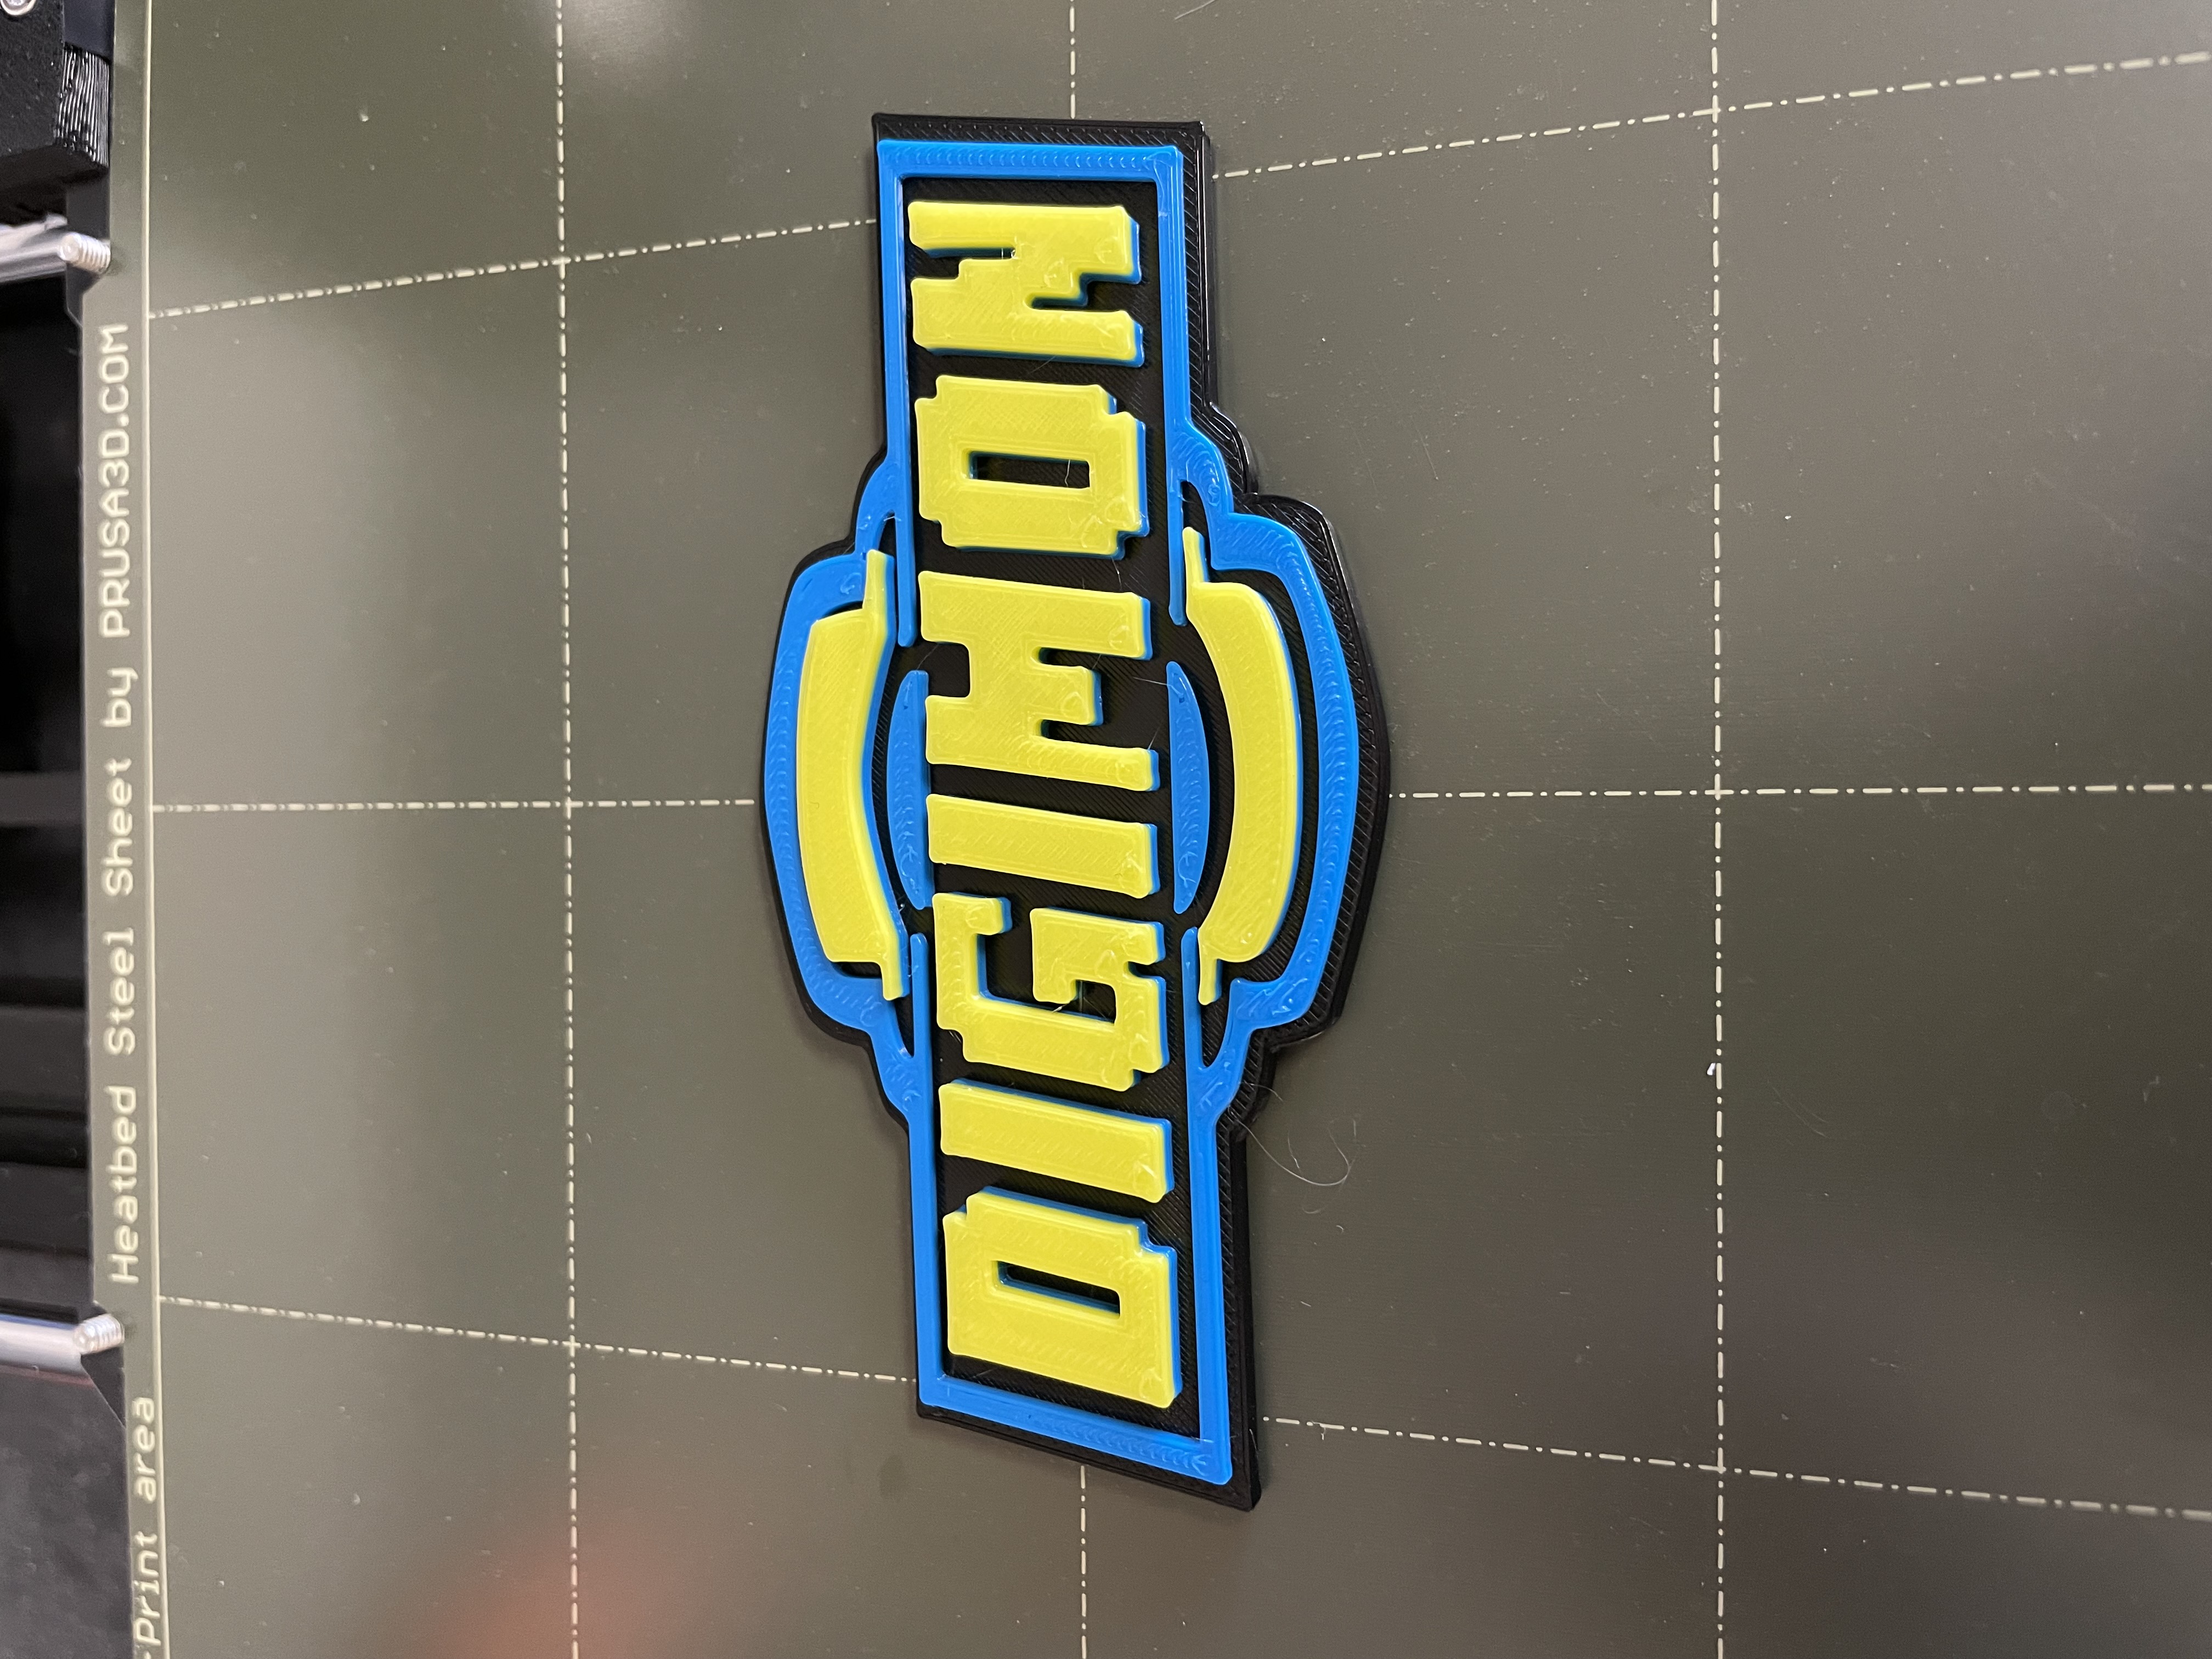 Digimon Logo